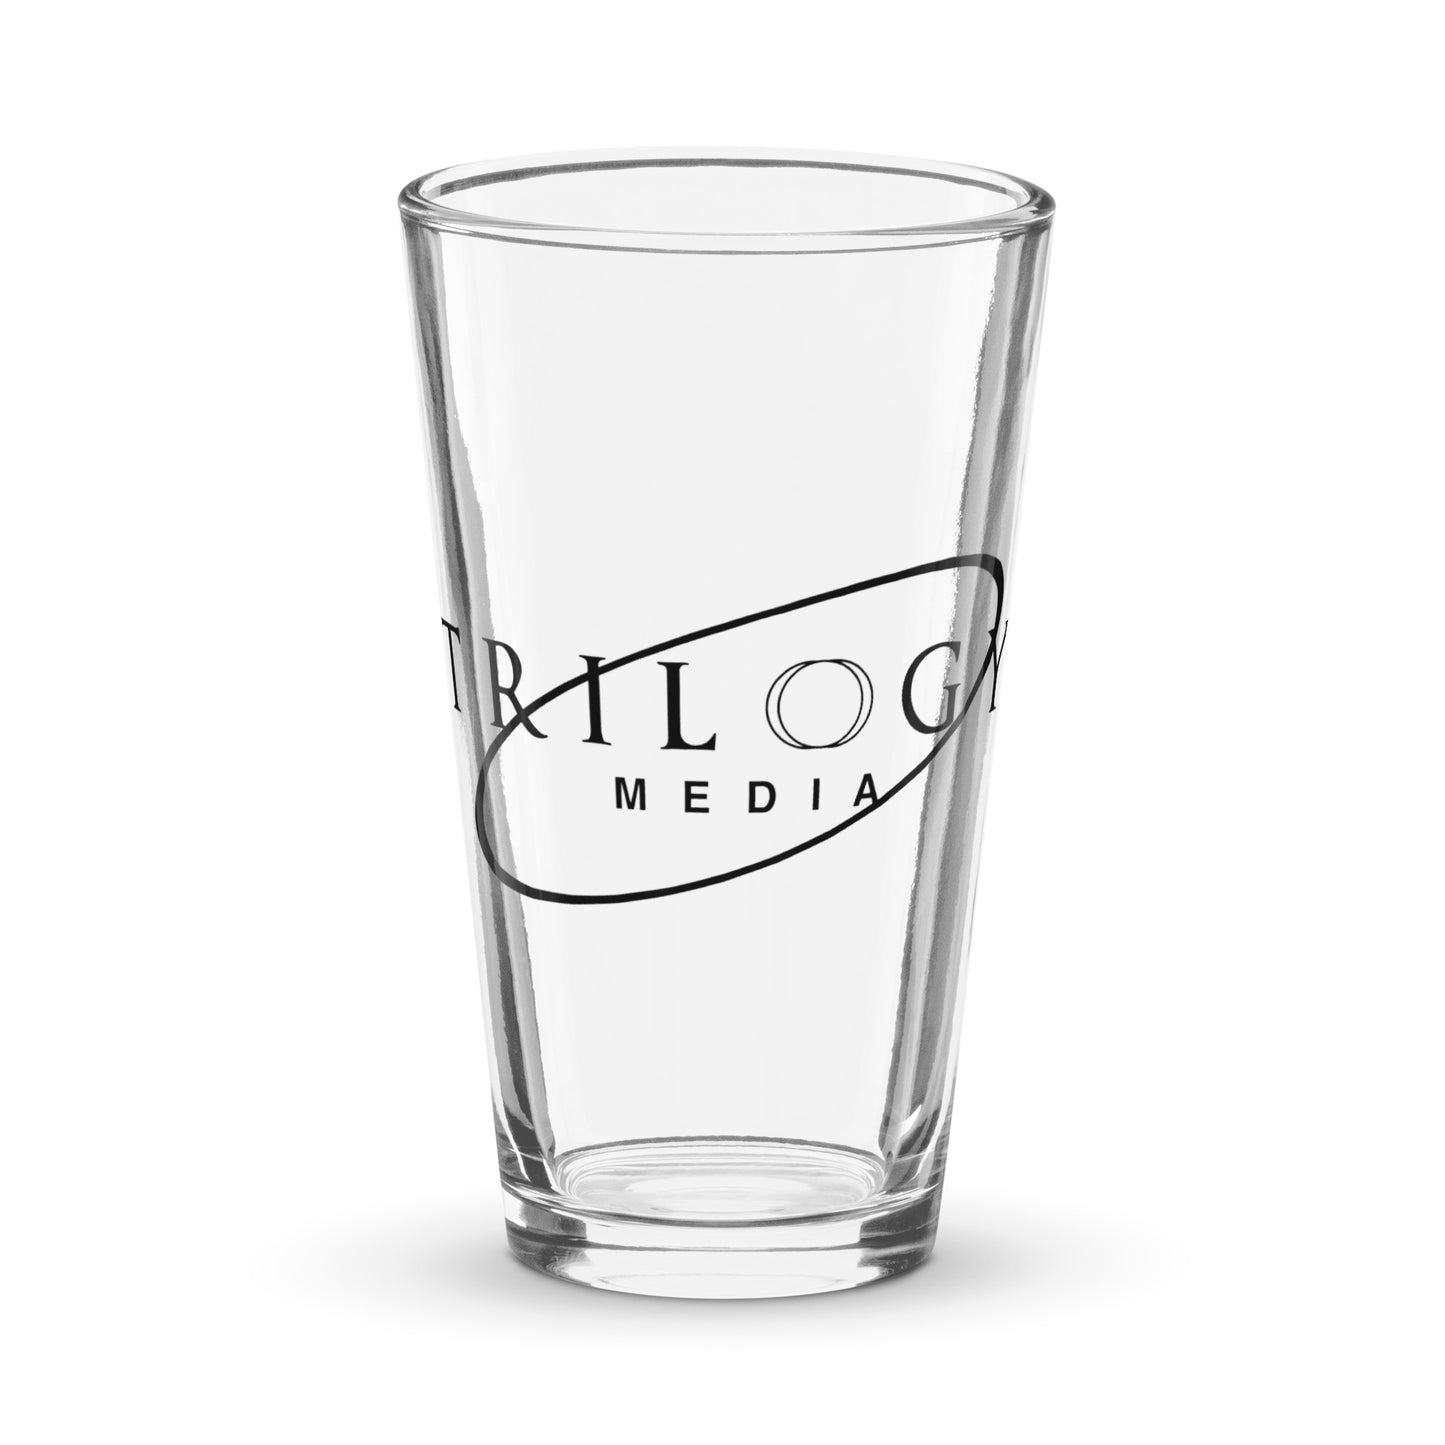 TRILOGY MEDIA LOGO | Pint Glass